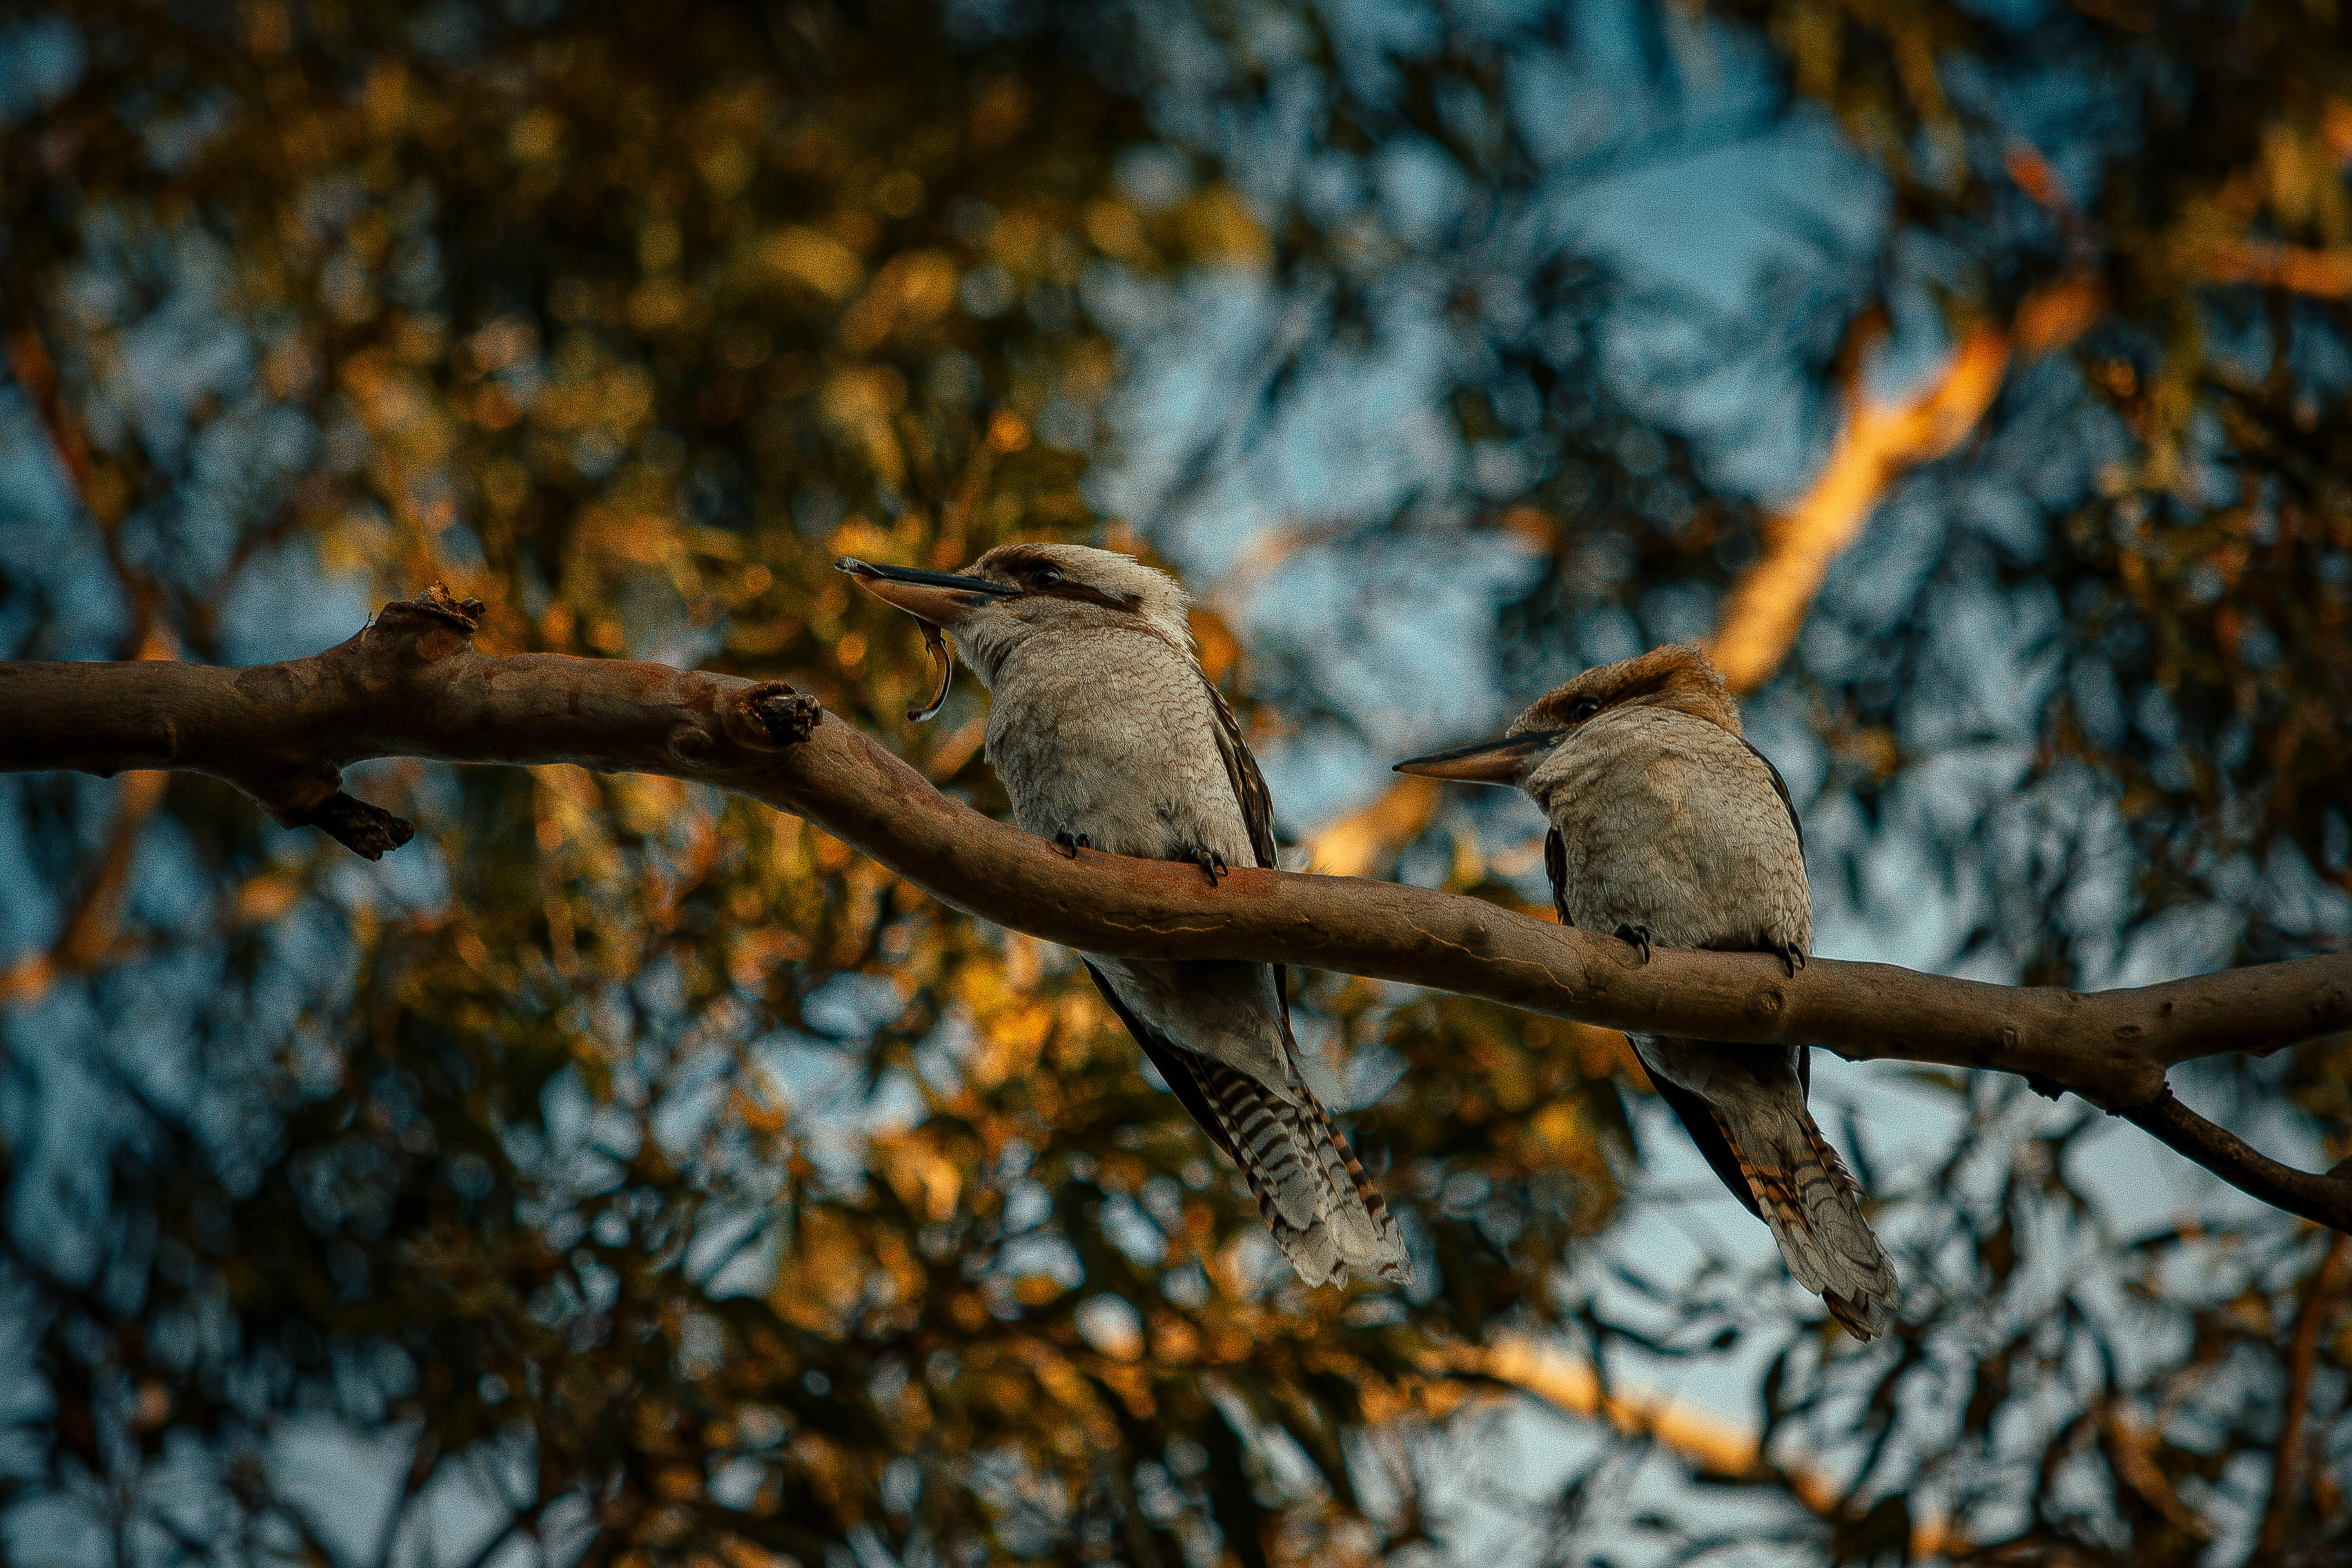 Two kookaburras sharing a meal in Australia